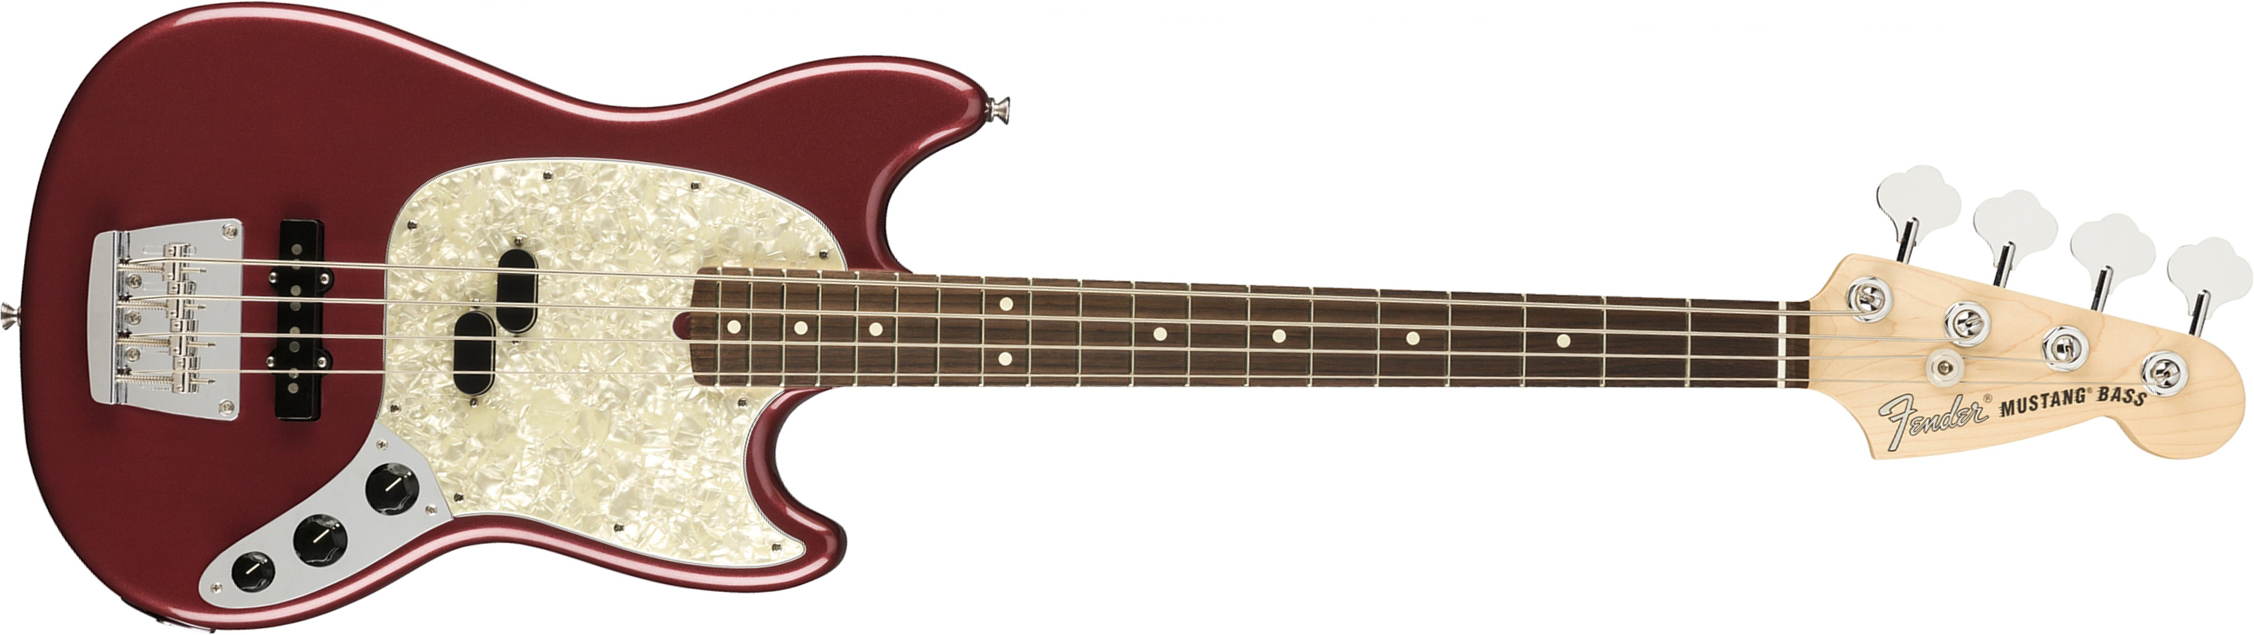 Fender Mustang Bass American Performer Usa Rw - Aubergine - Basse Électrique Enfants - Main picture